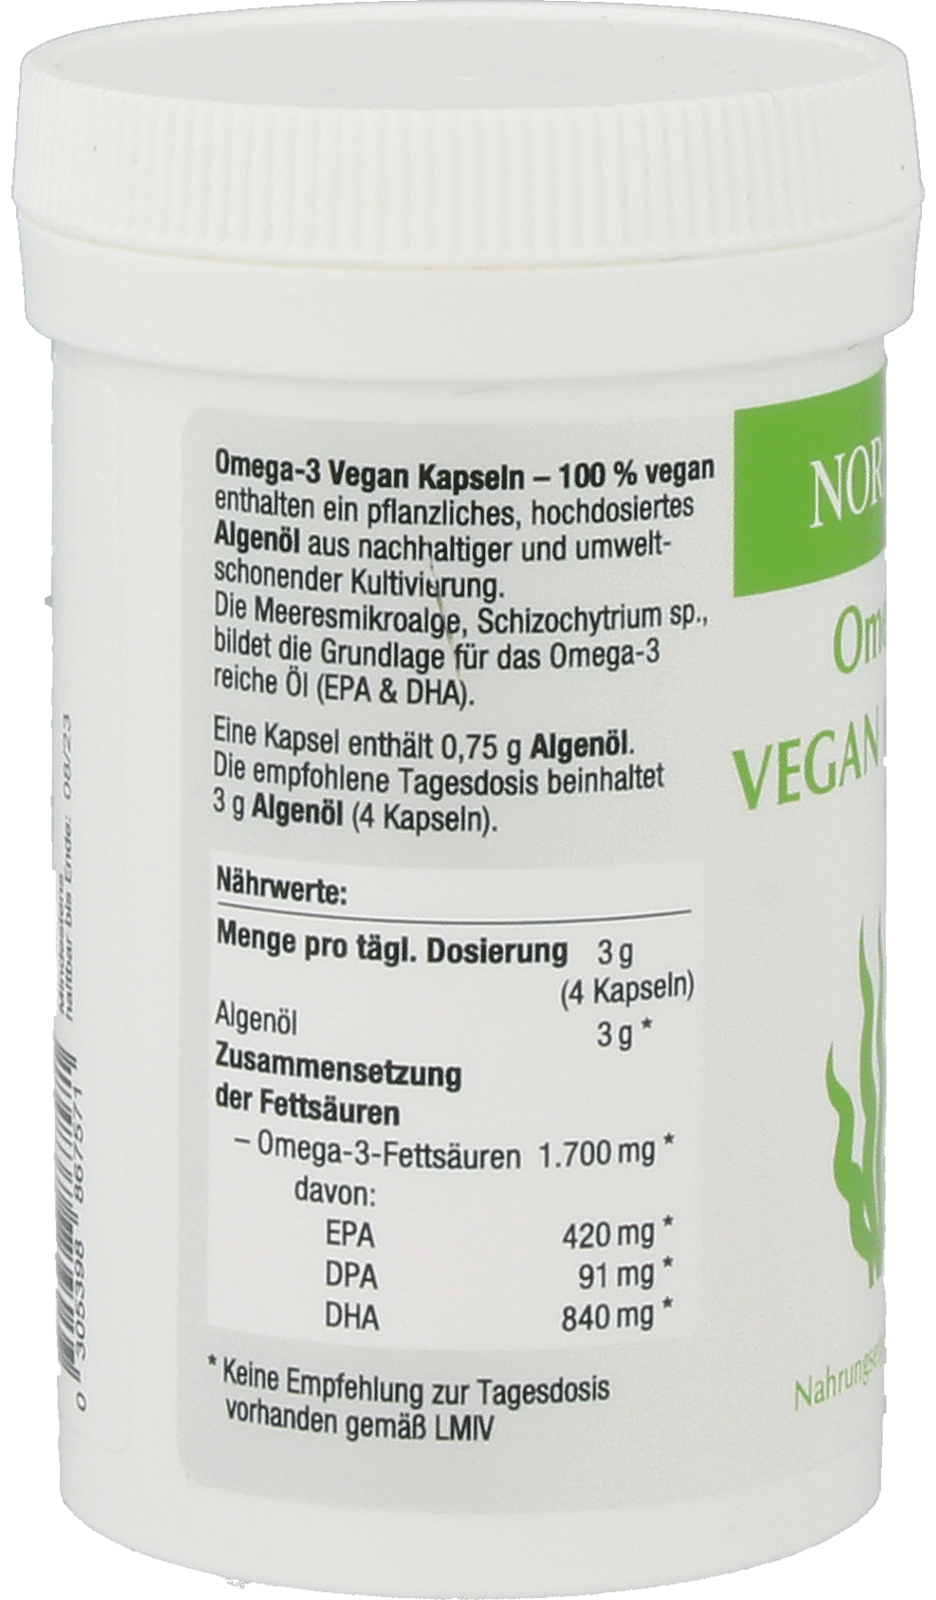 NORSAN Omega-3 Vegan 